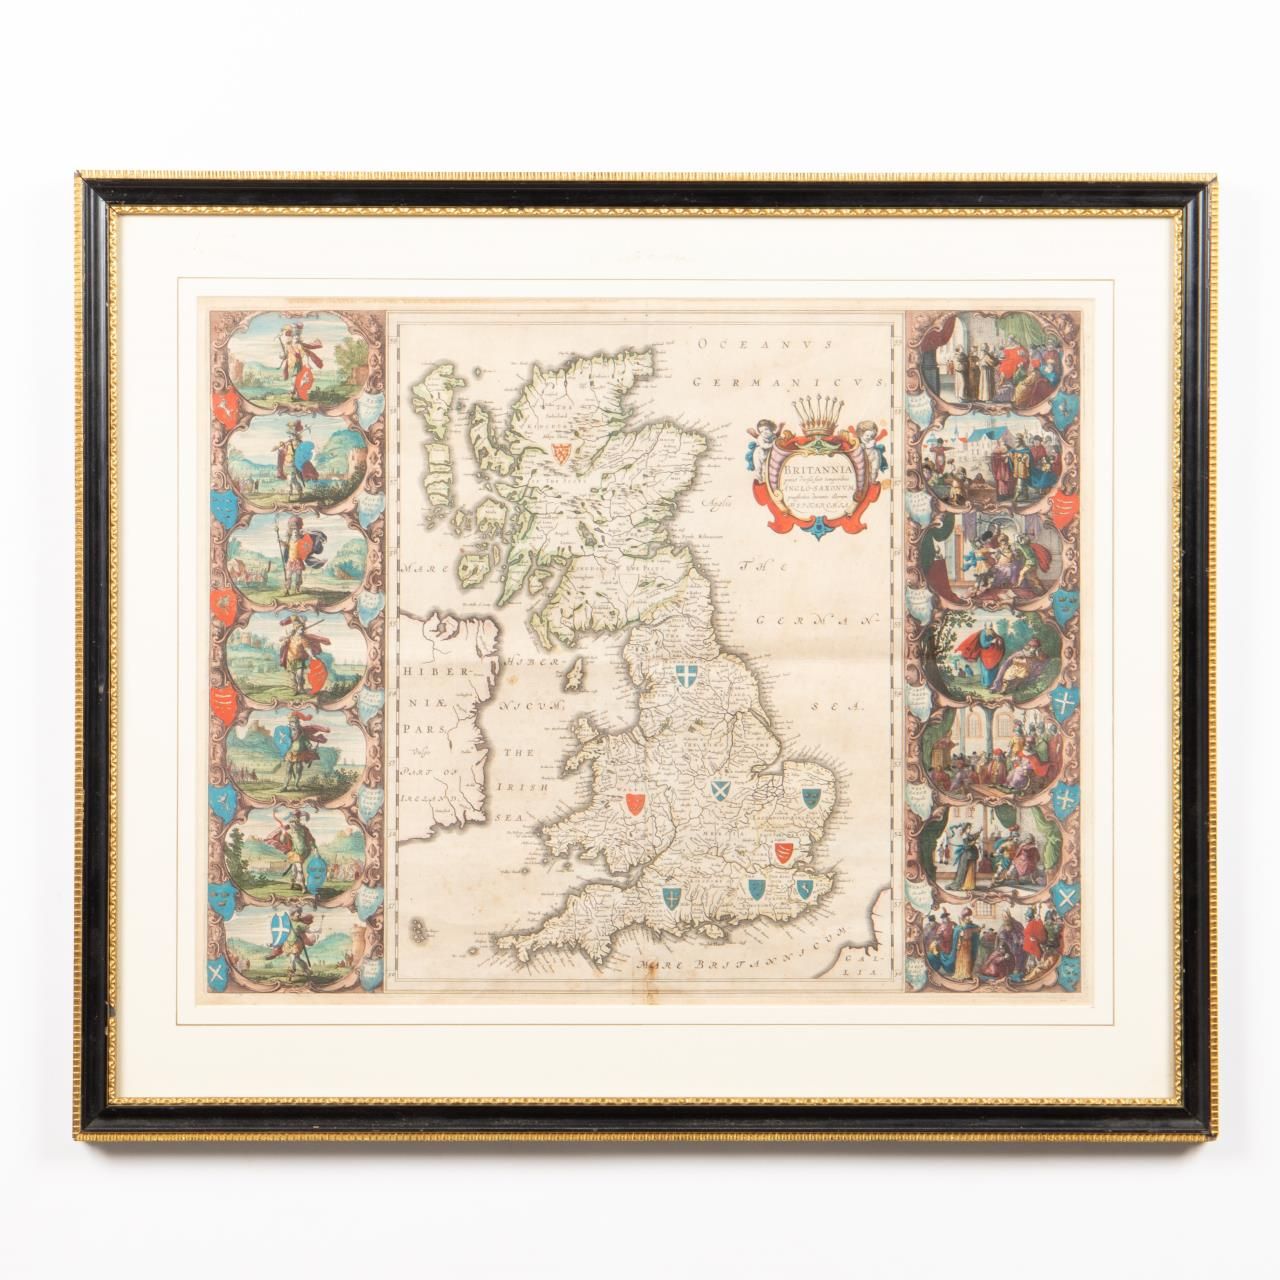 WILLEM BLAEU, MAP OF GREAT BRITAIN,